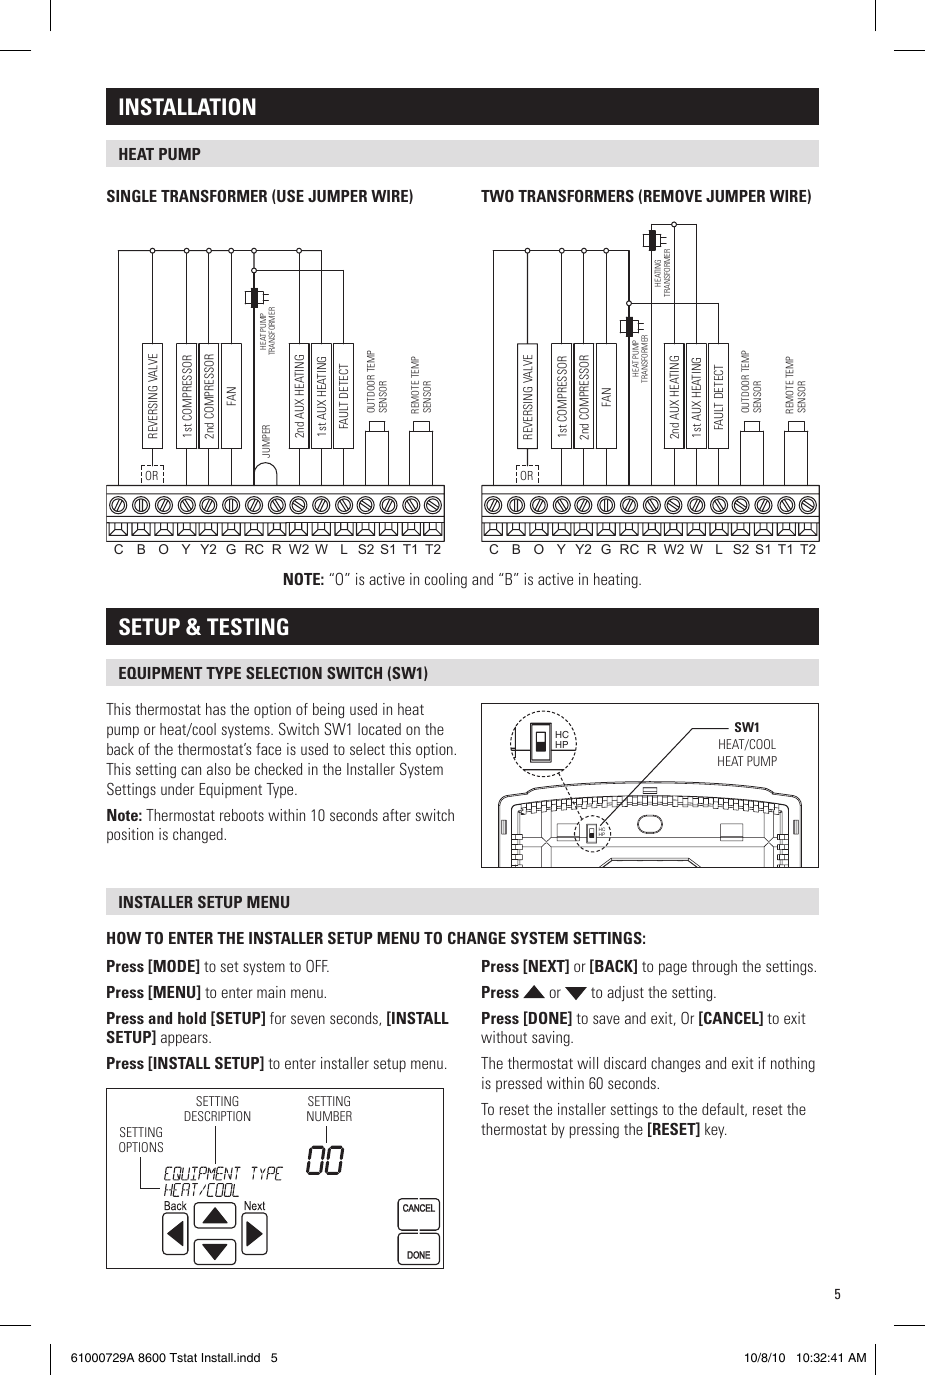 Diagram Honeywell Humidifier Wiring Diagram Automatic Full Version Hd Quality Diagram Automatic Ringdoorbellwiringdiagram Arthys Fr